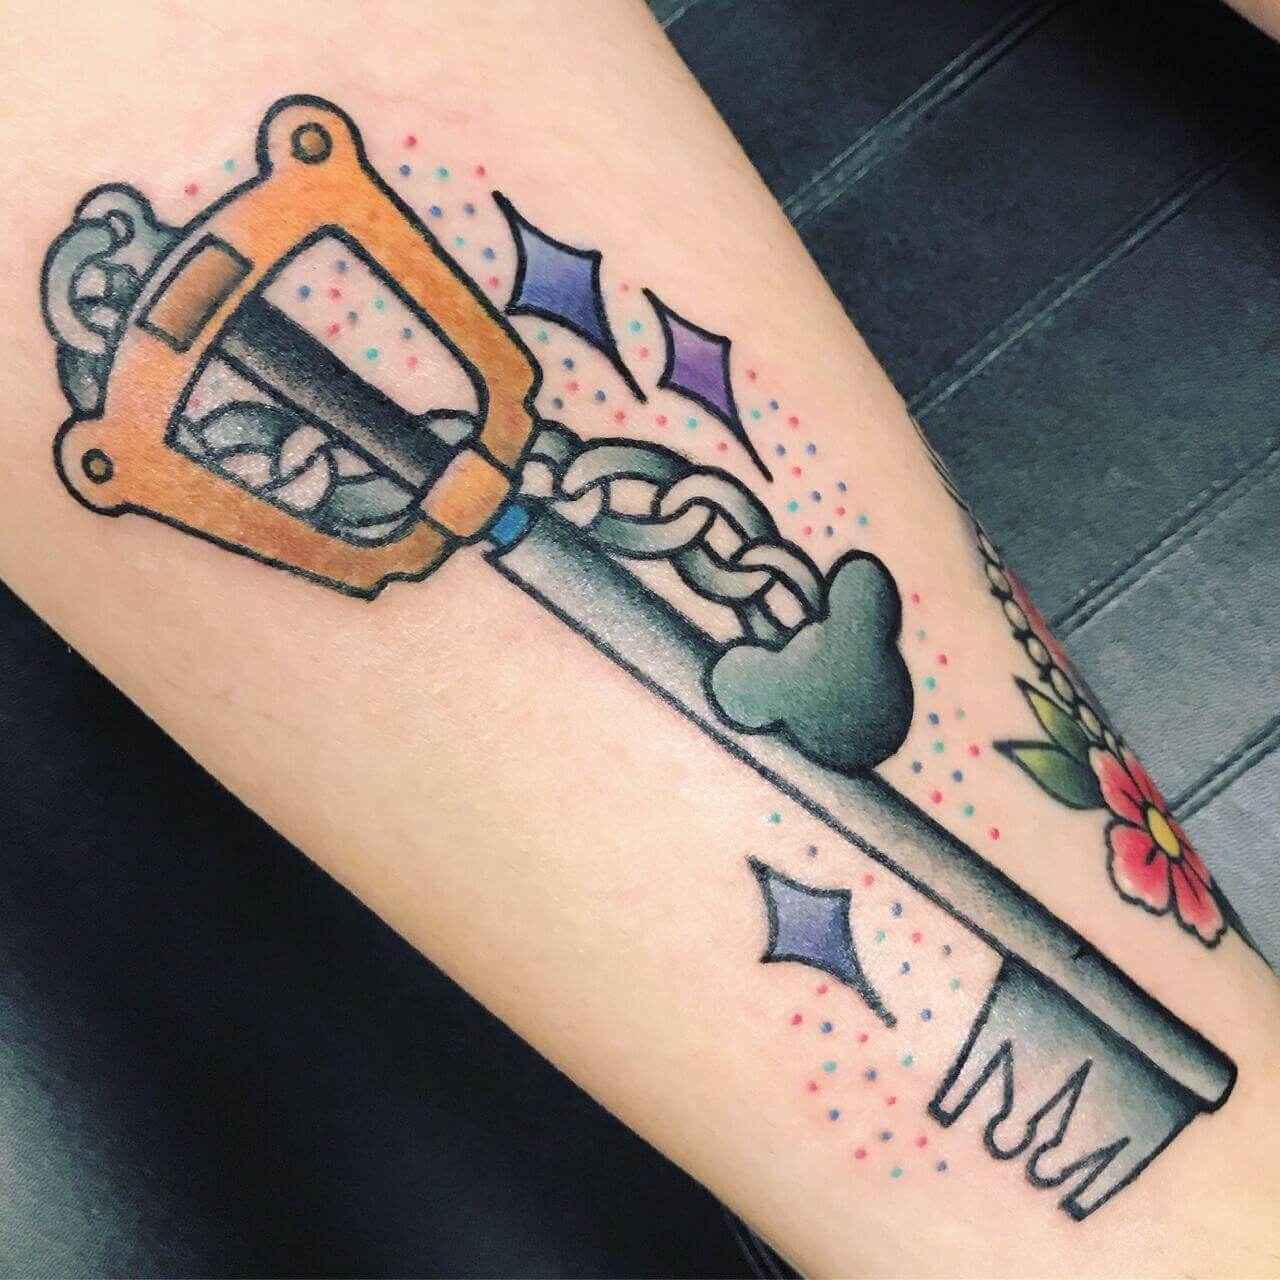 keyblade tattoo on arm